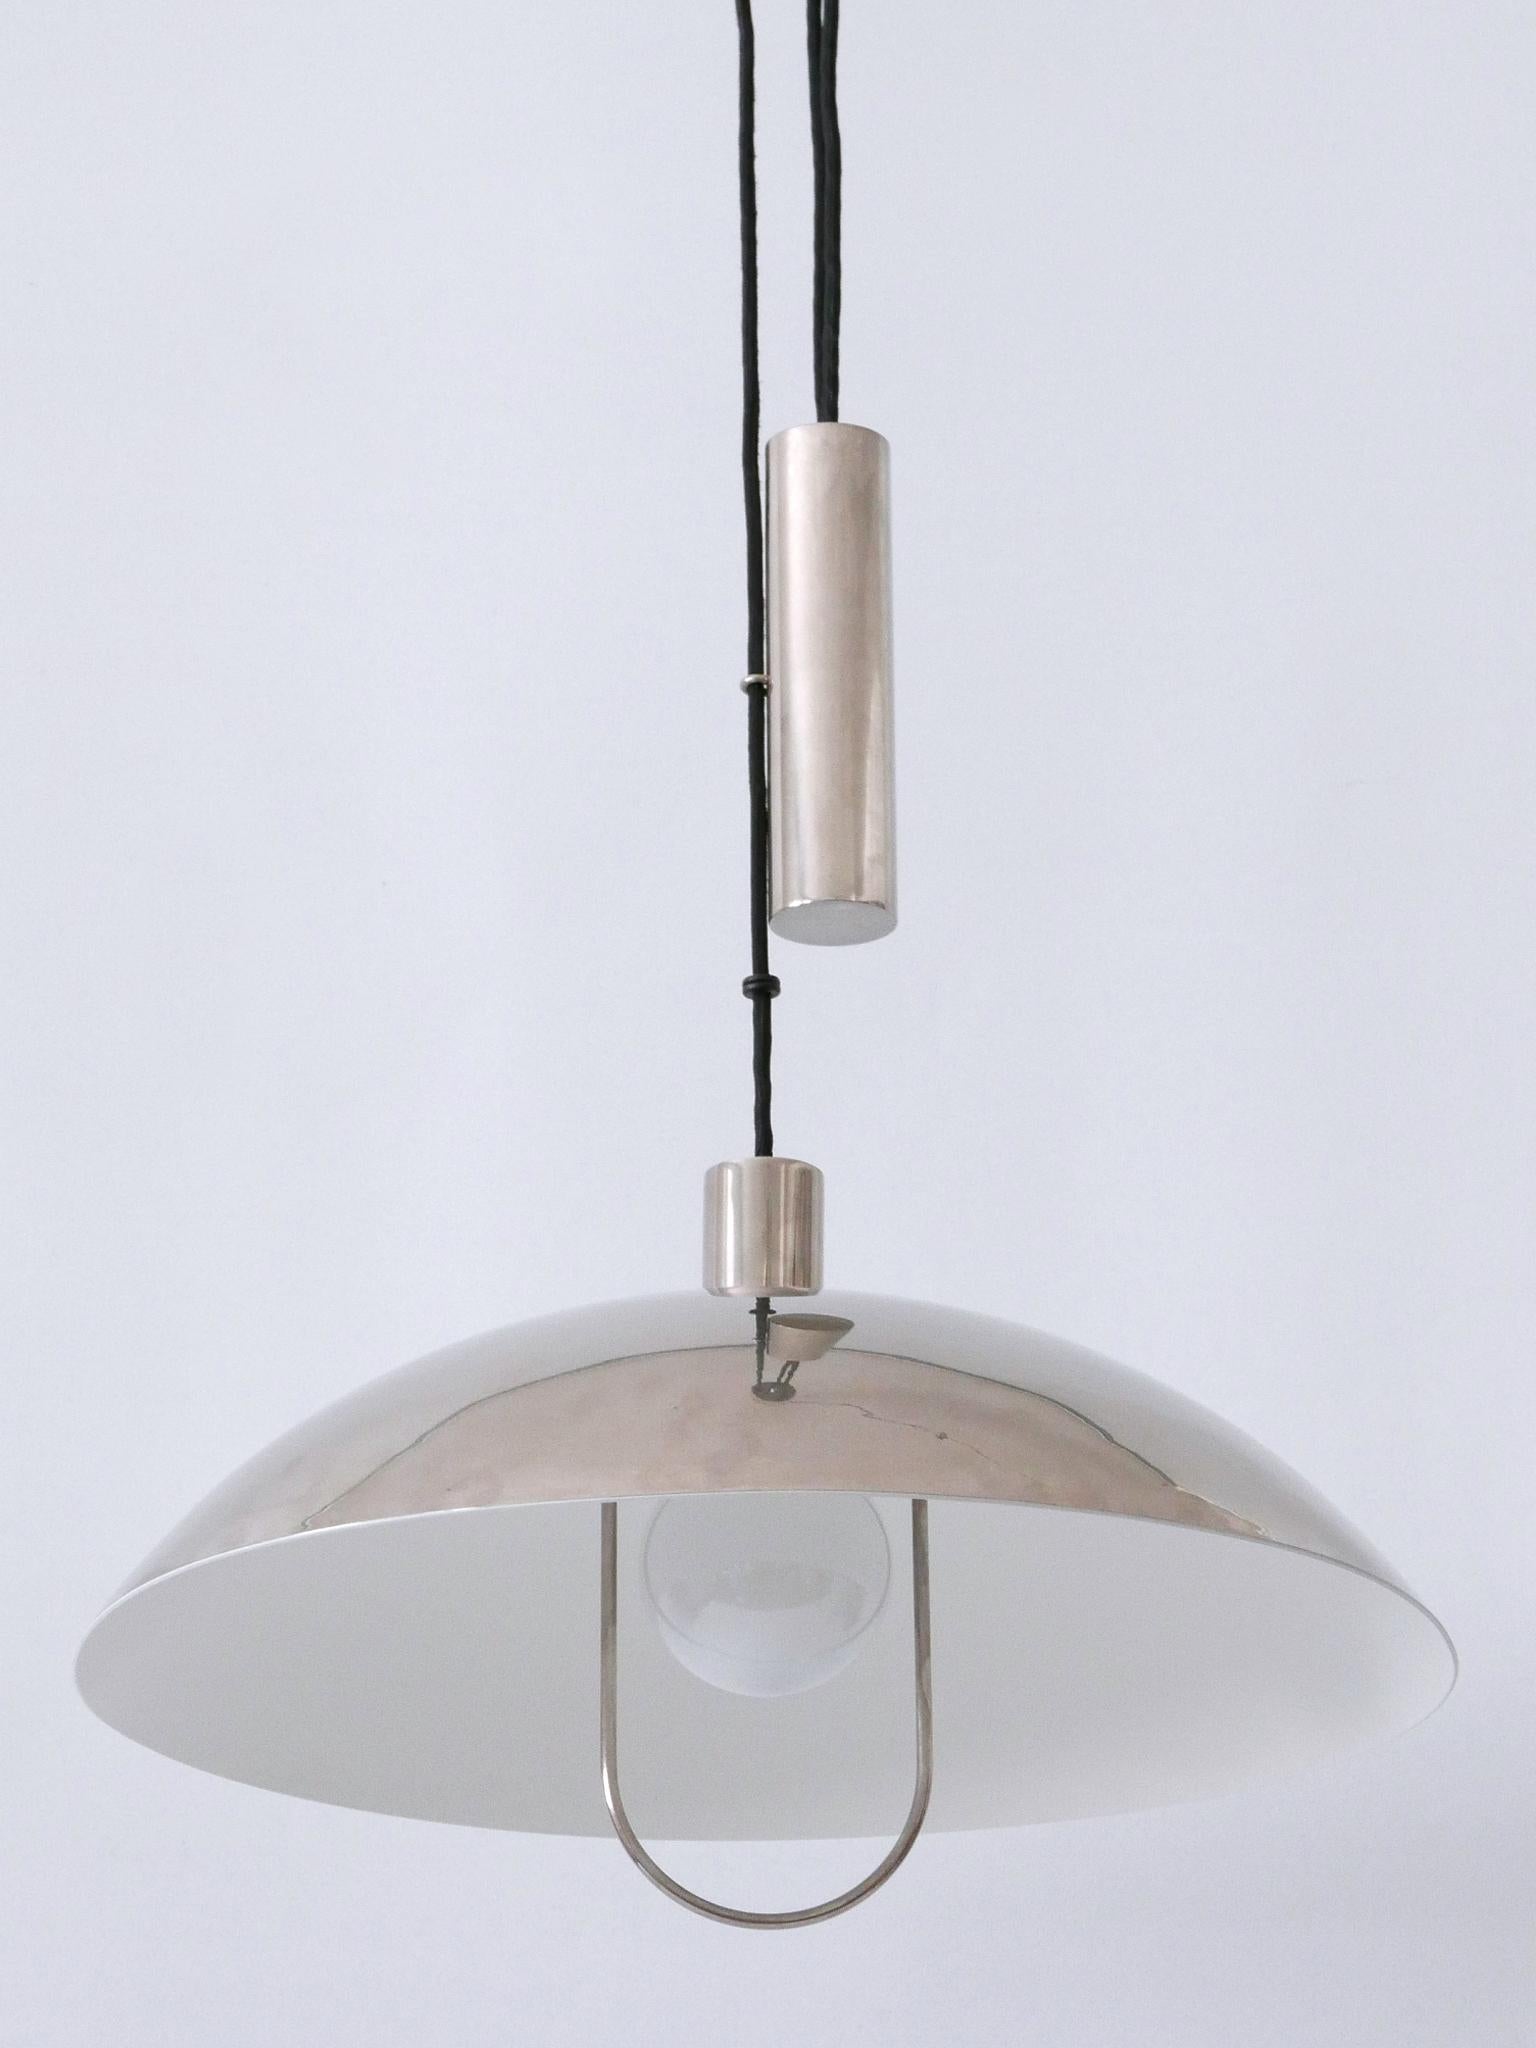 Early Tecnolumen Pendant Lamp 'Bauhaus HMB 25/500' by Marianne Brandt 1980s For Sale 9